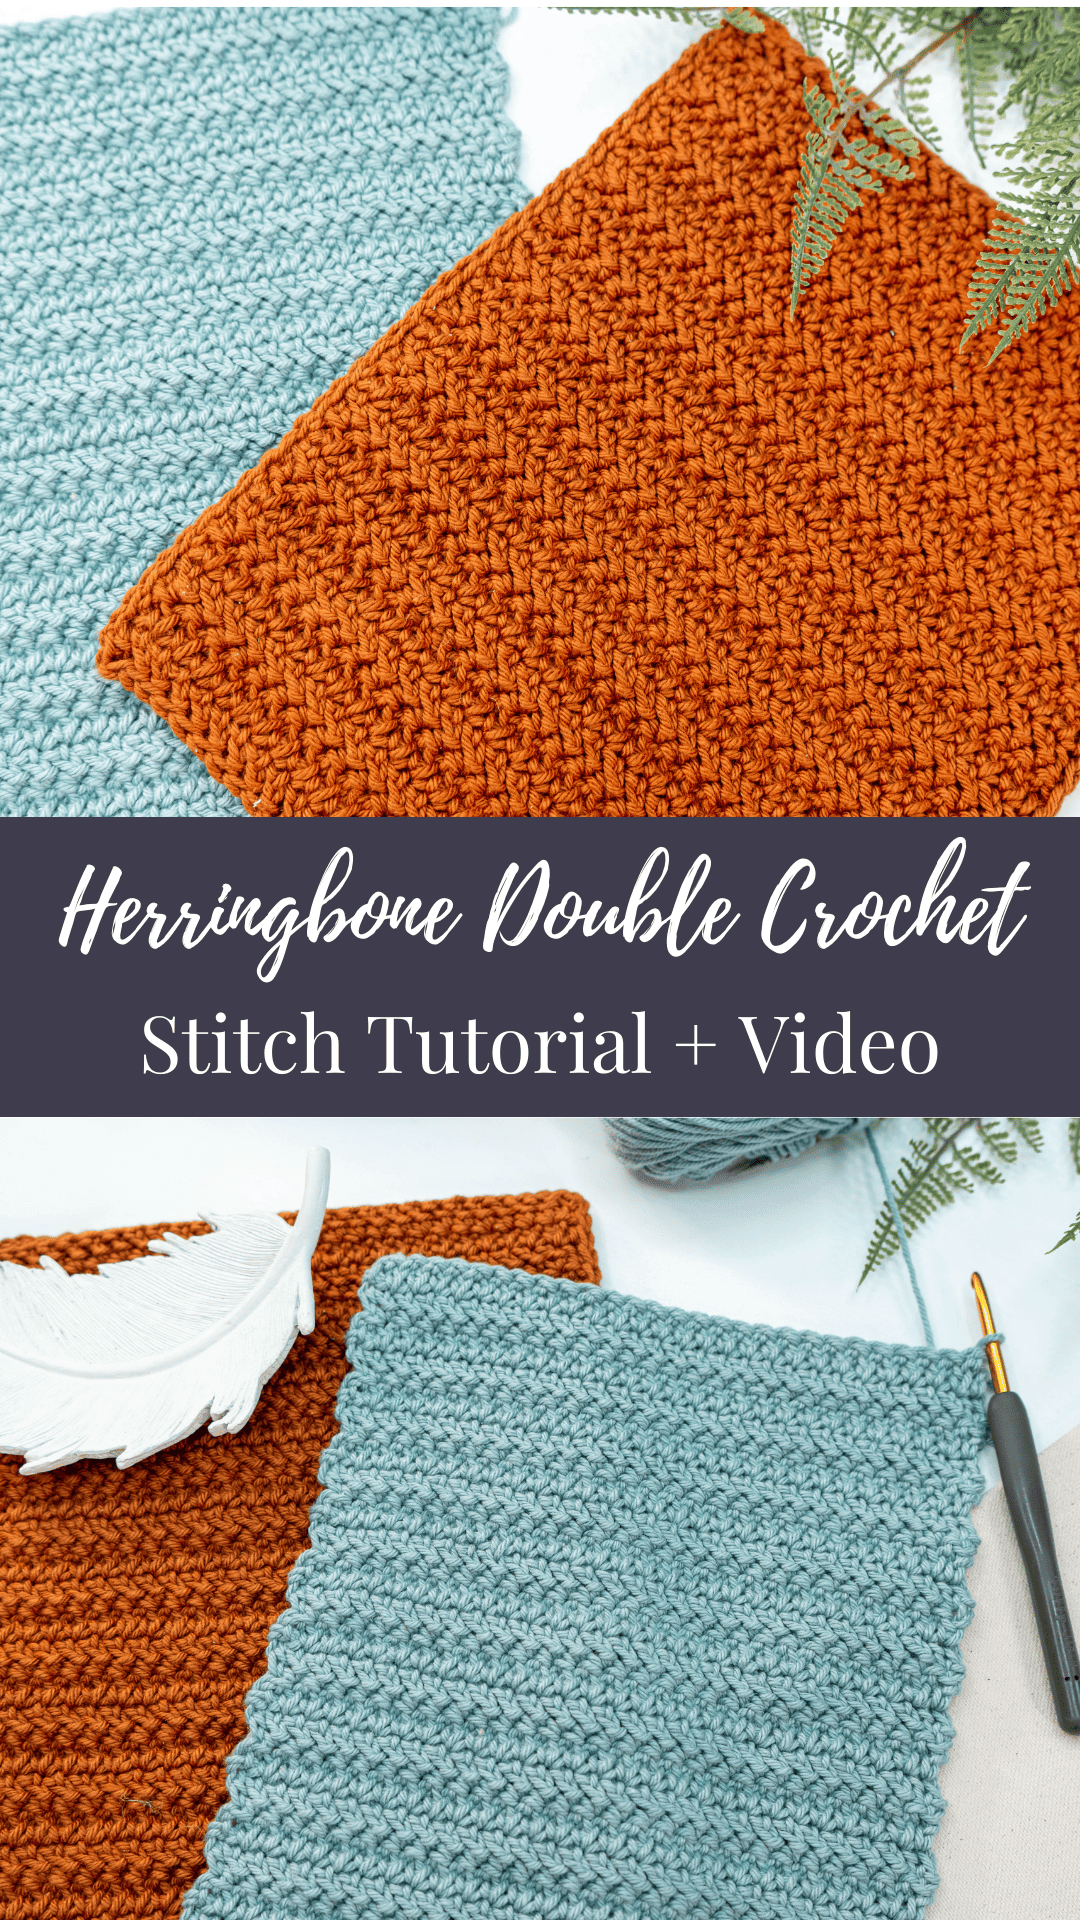 Herringbone Double Crochet Stitch Tutorial (Hbdc)